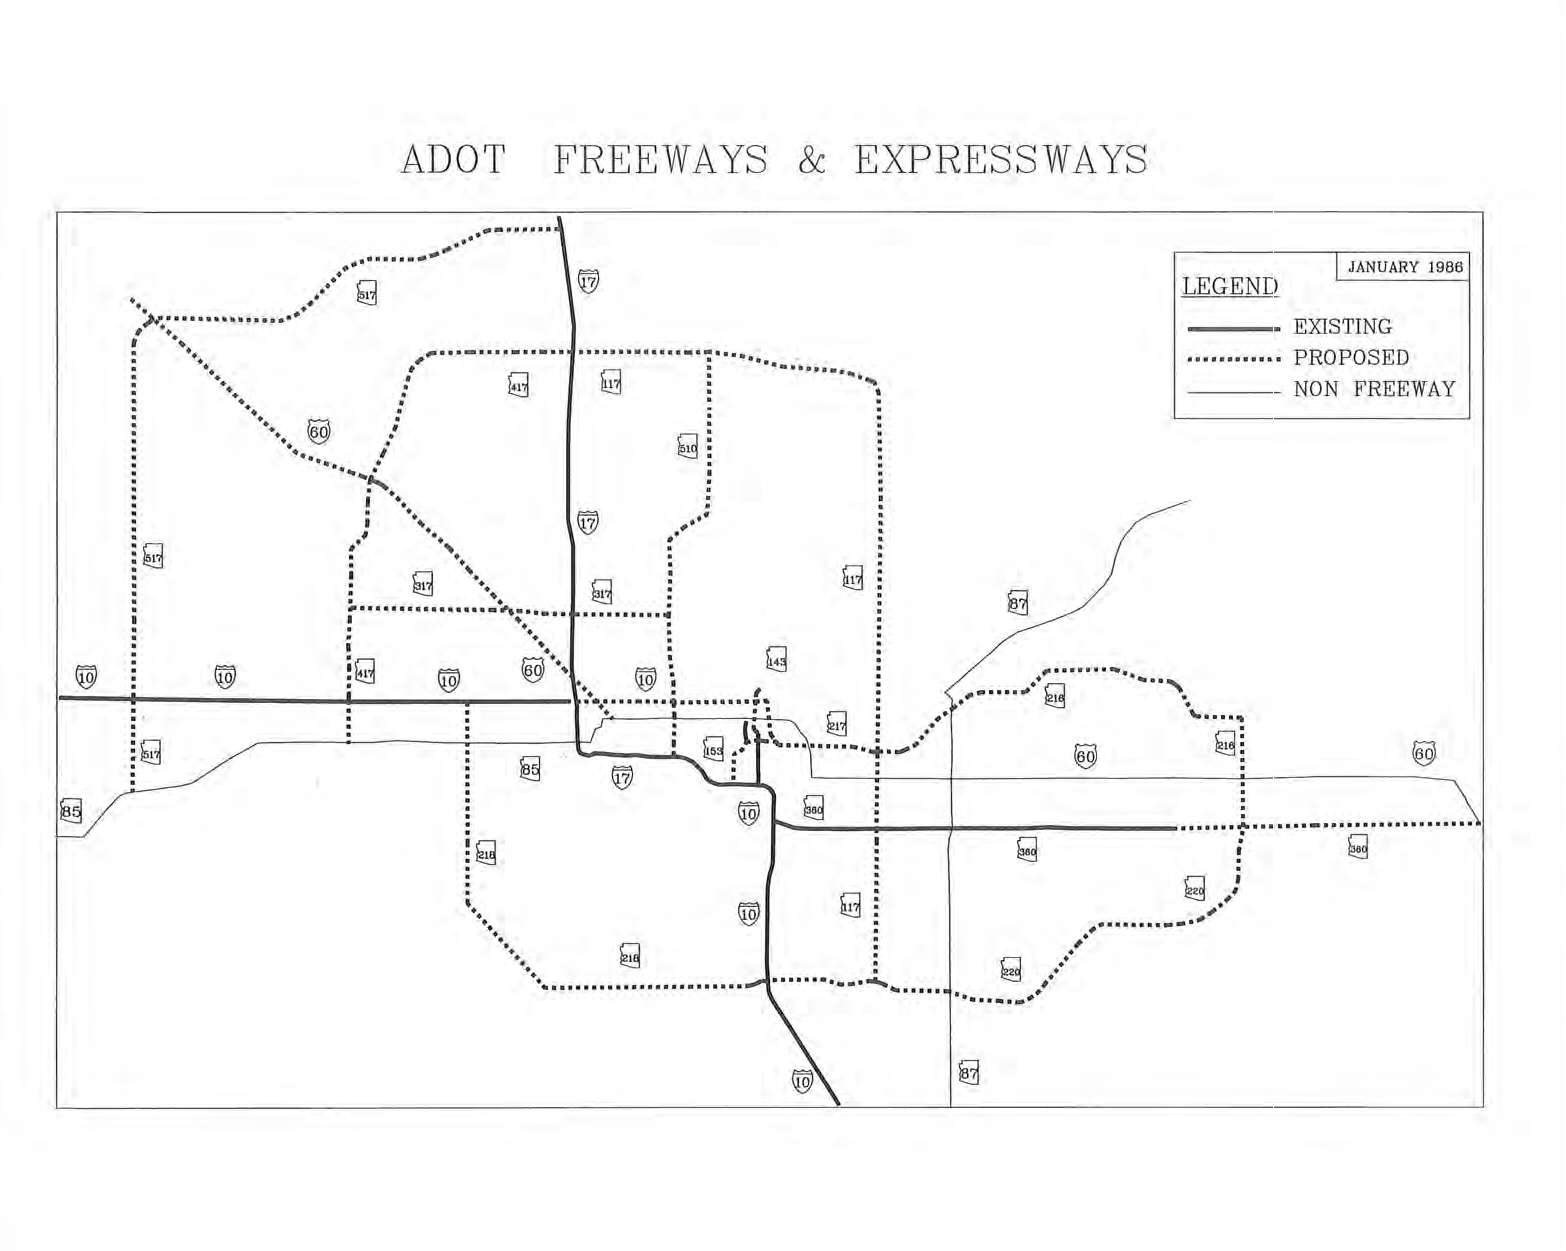 1986 Proposed Phoenix Freeways